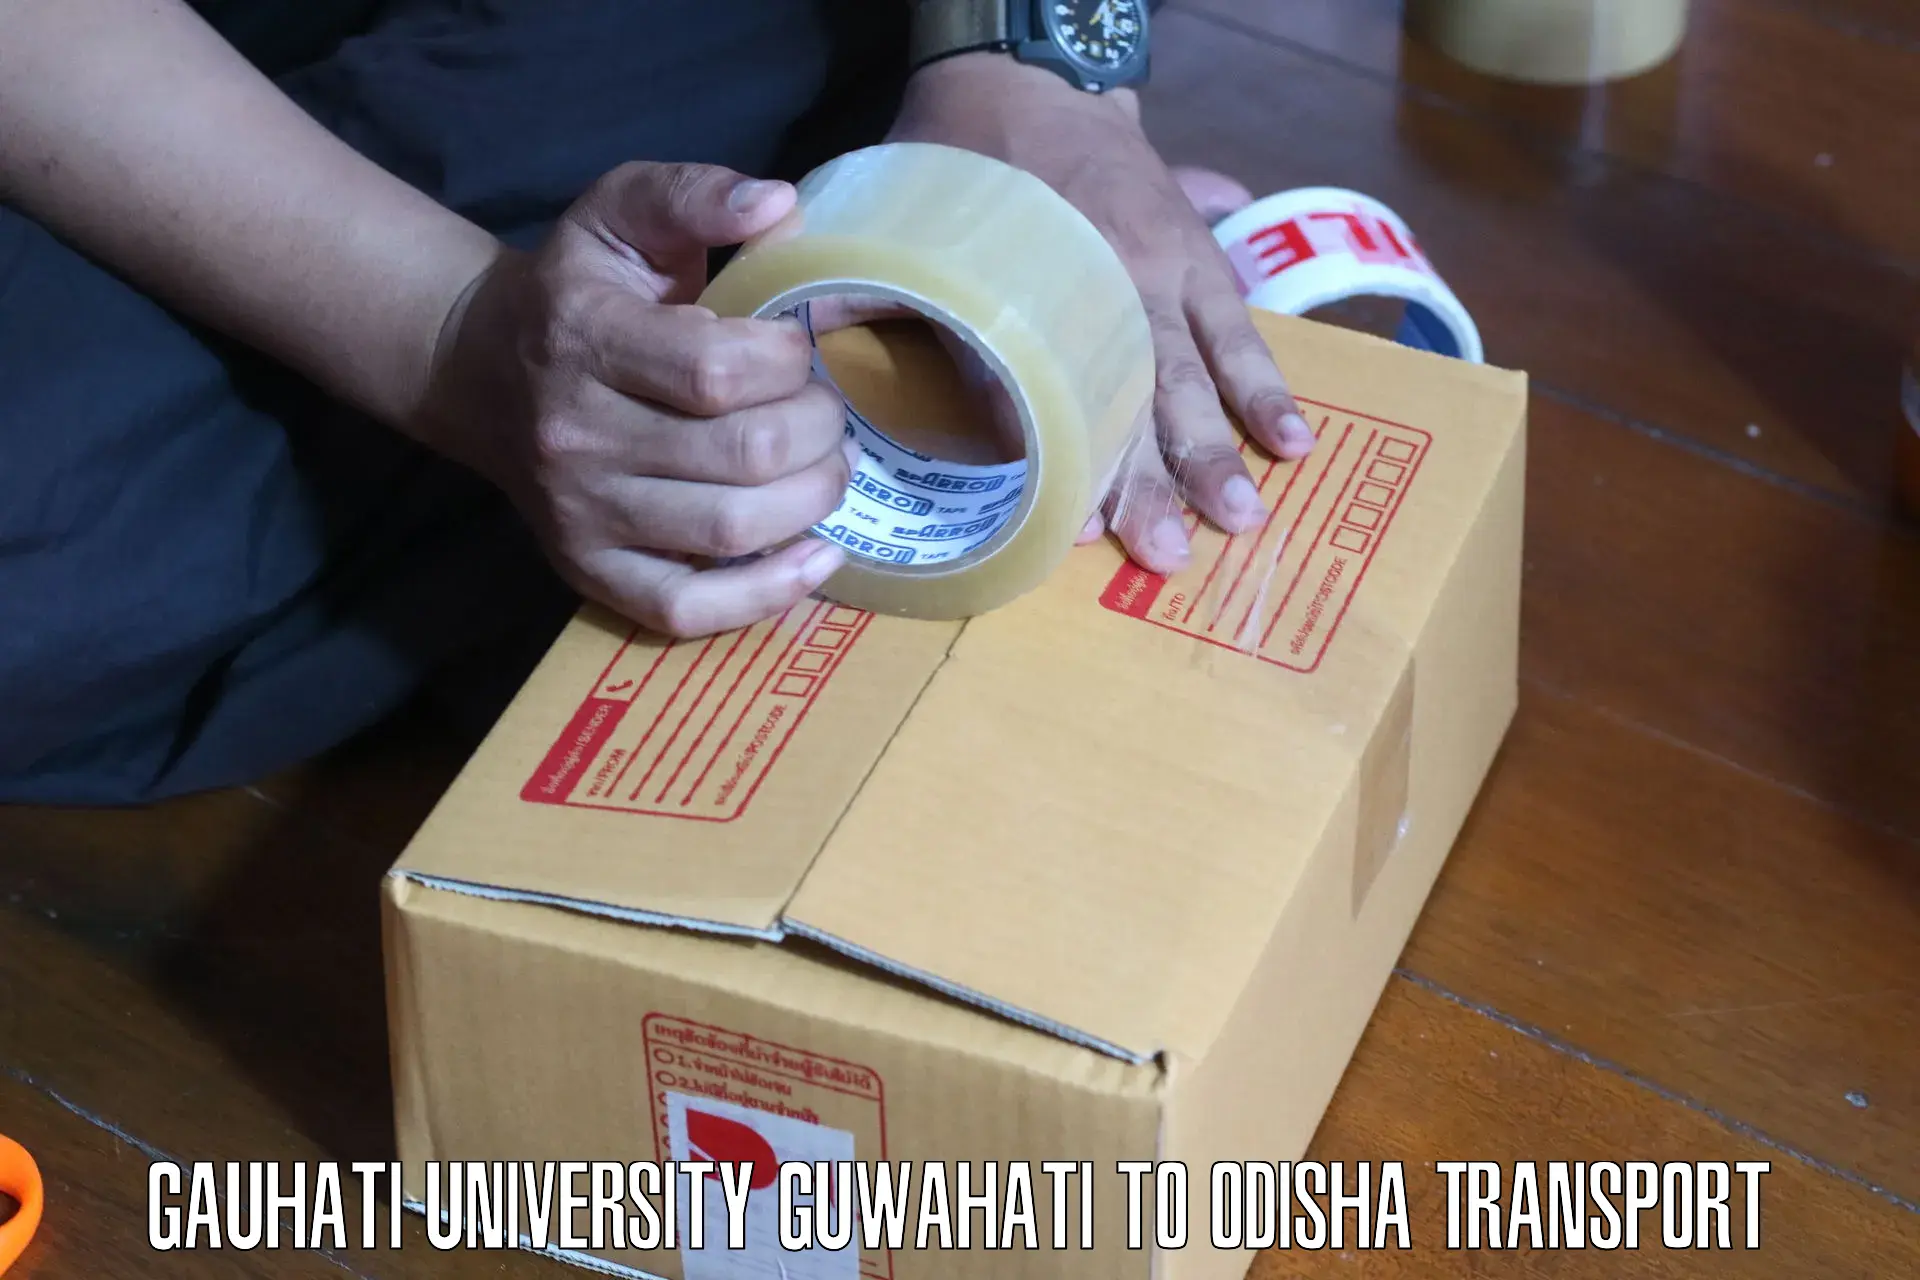 Transport in sharing Gauhati University Guwahati to Tikiri